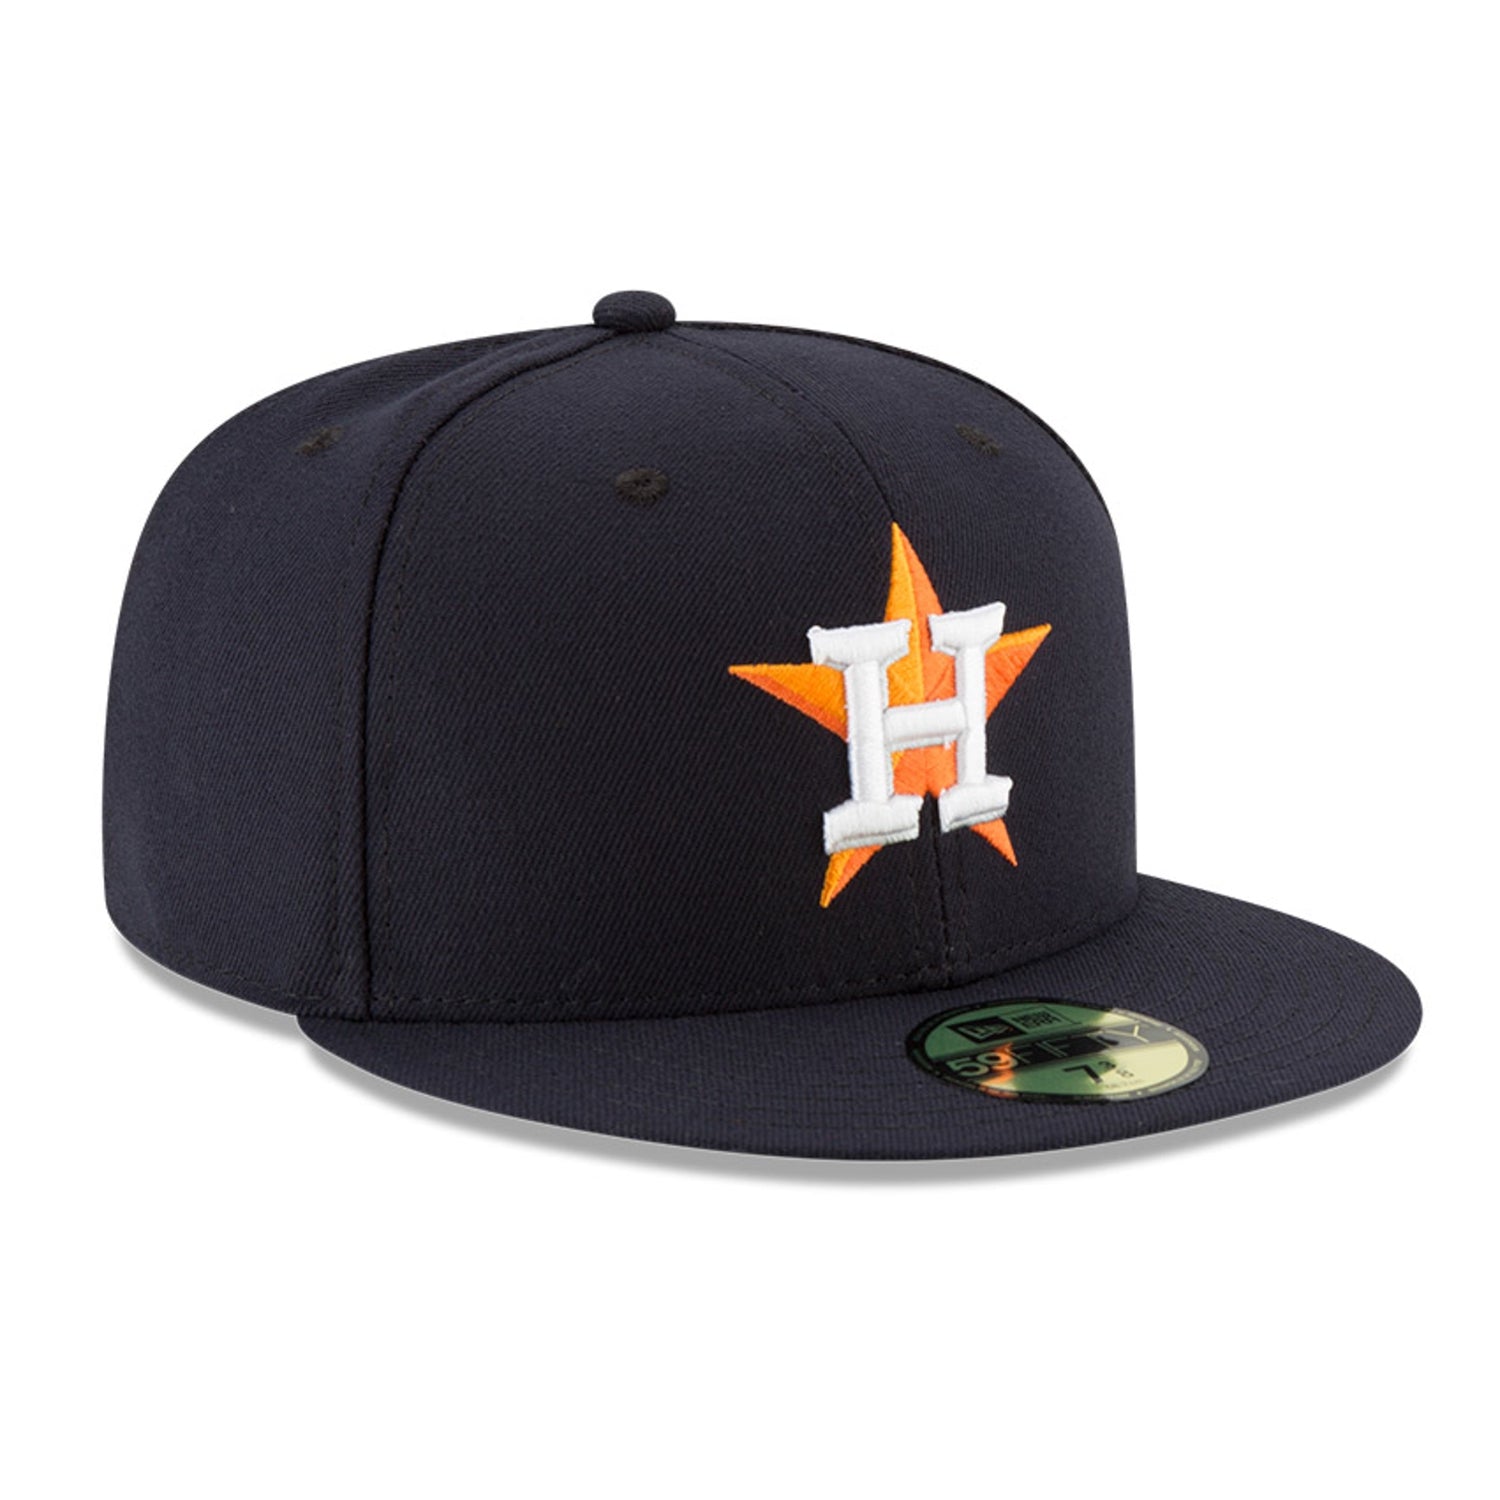 New Era / Hat Club Exclusive Houston Astros Monaco Fitted Hat Sz. 7